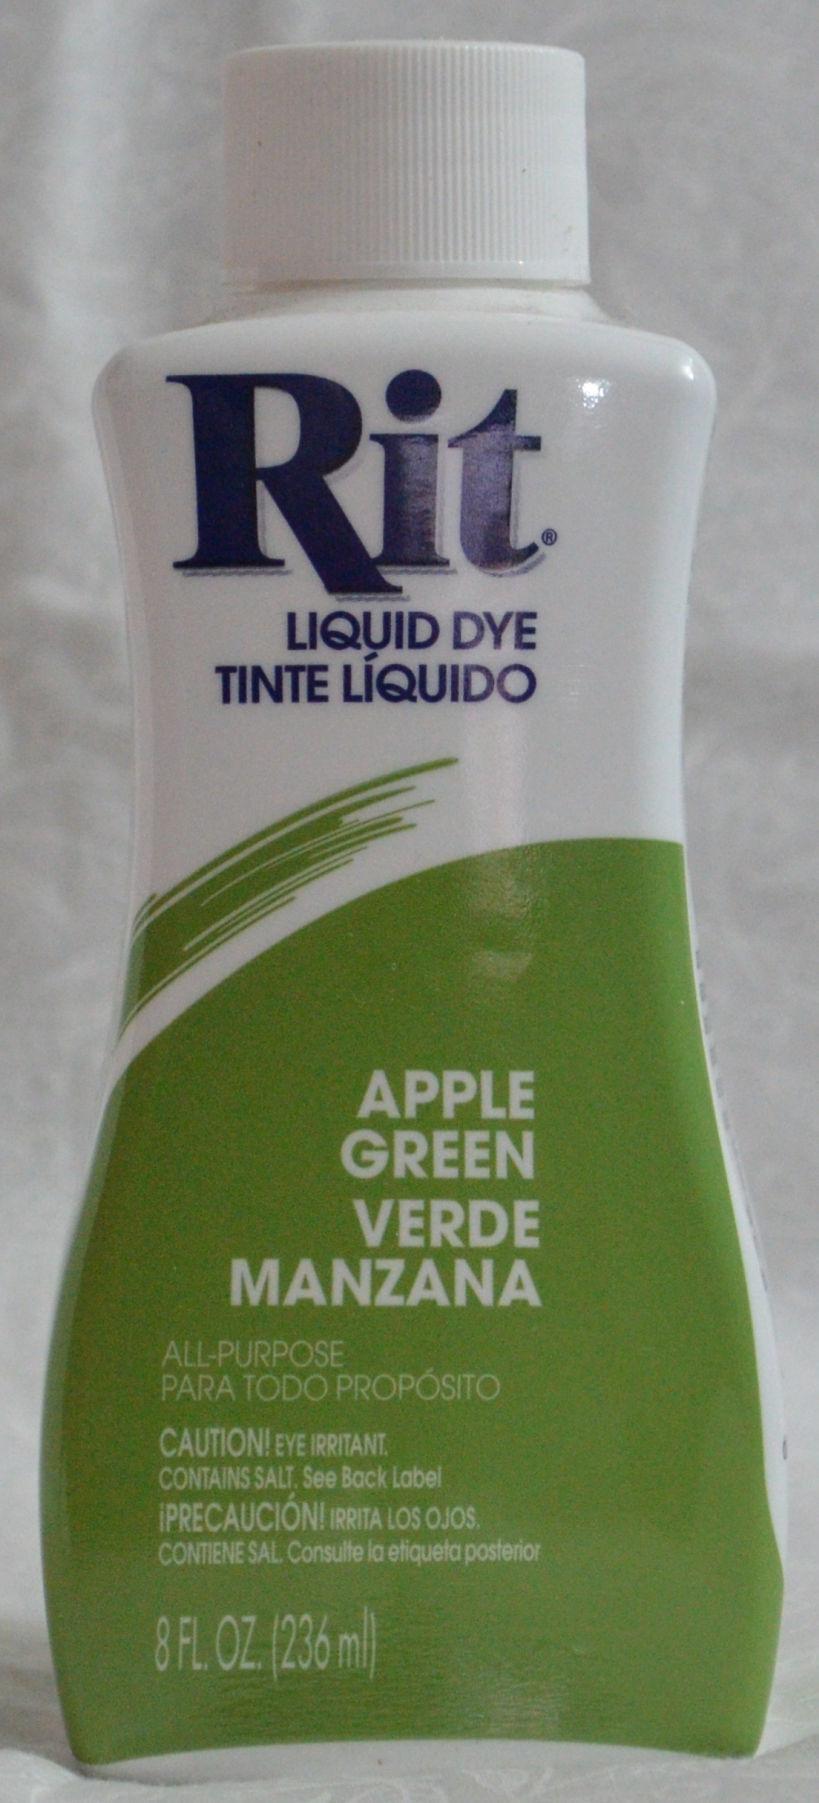 Rit Kelly Green, All Purpose Liquid Dye